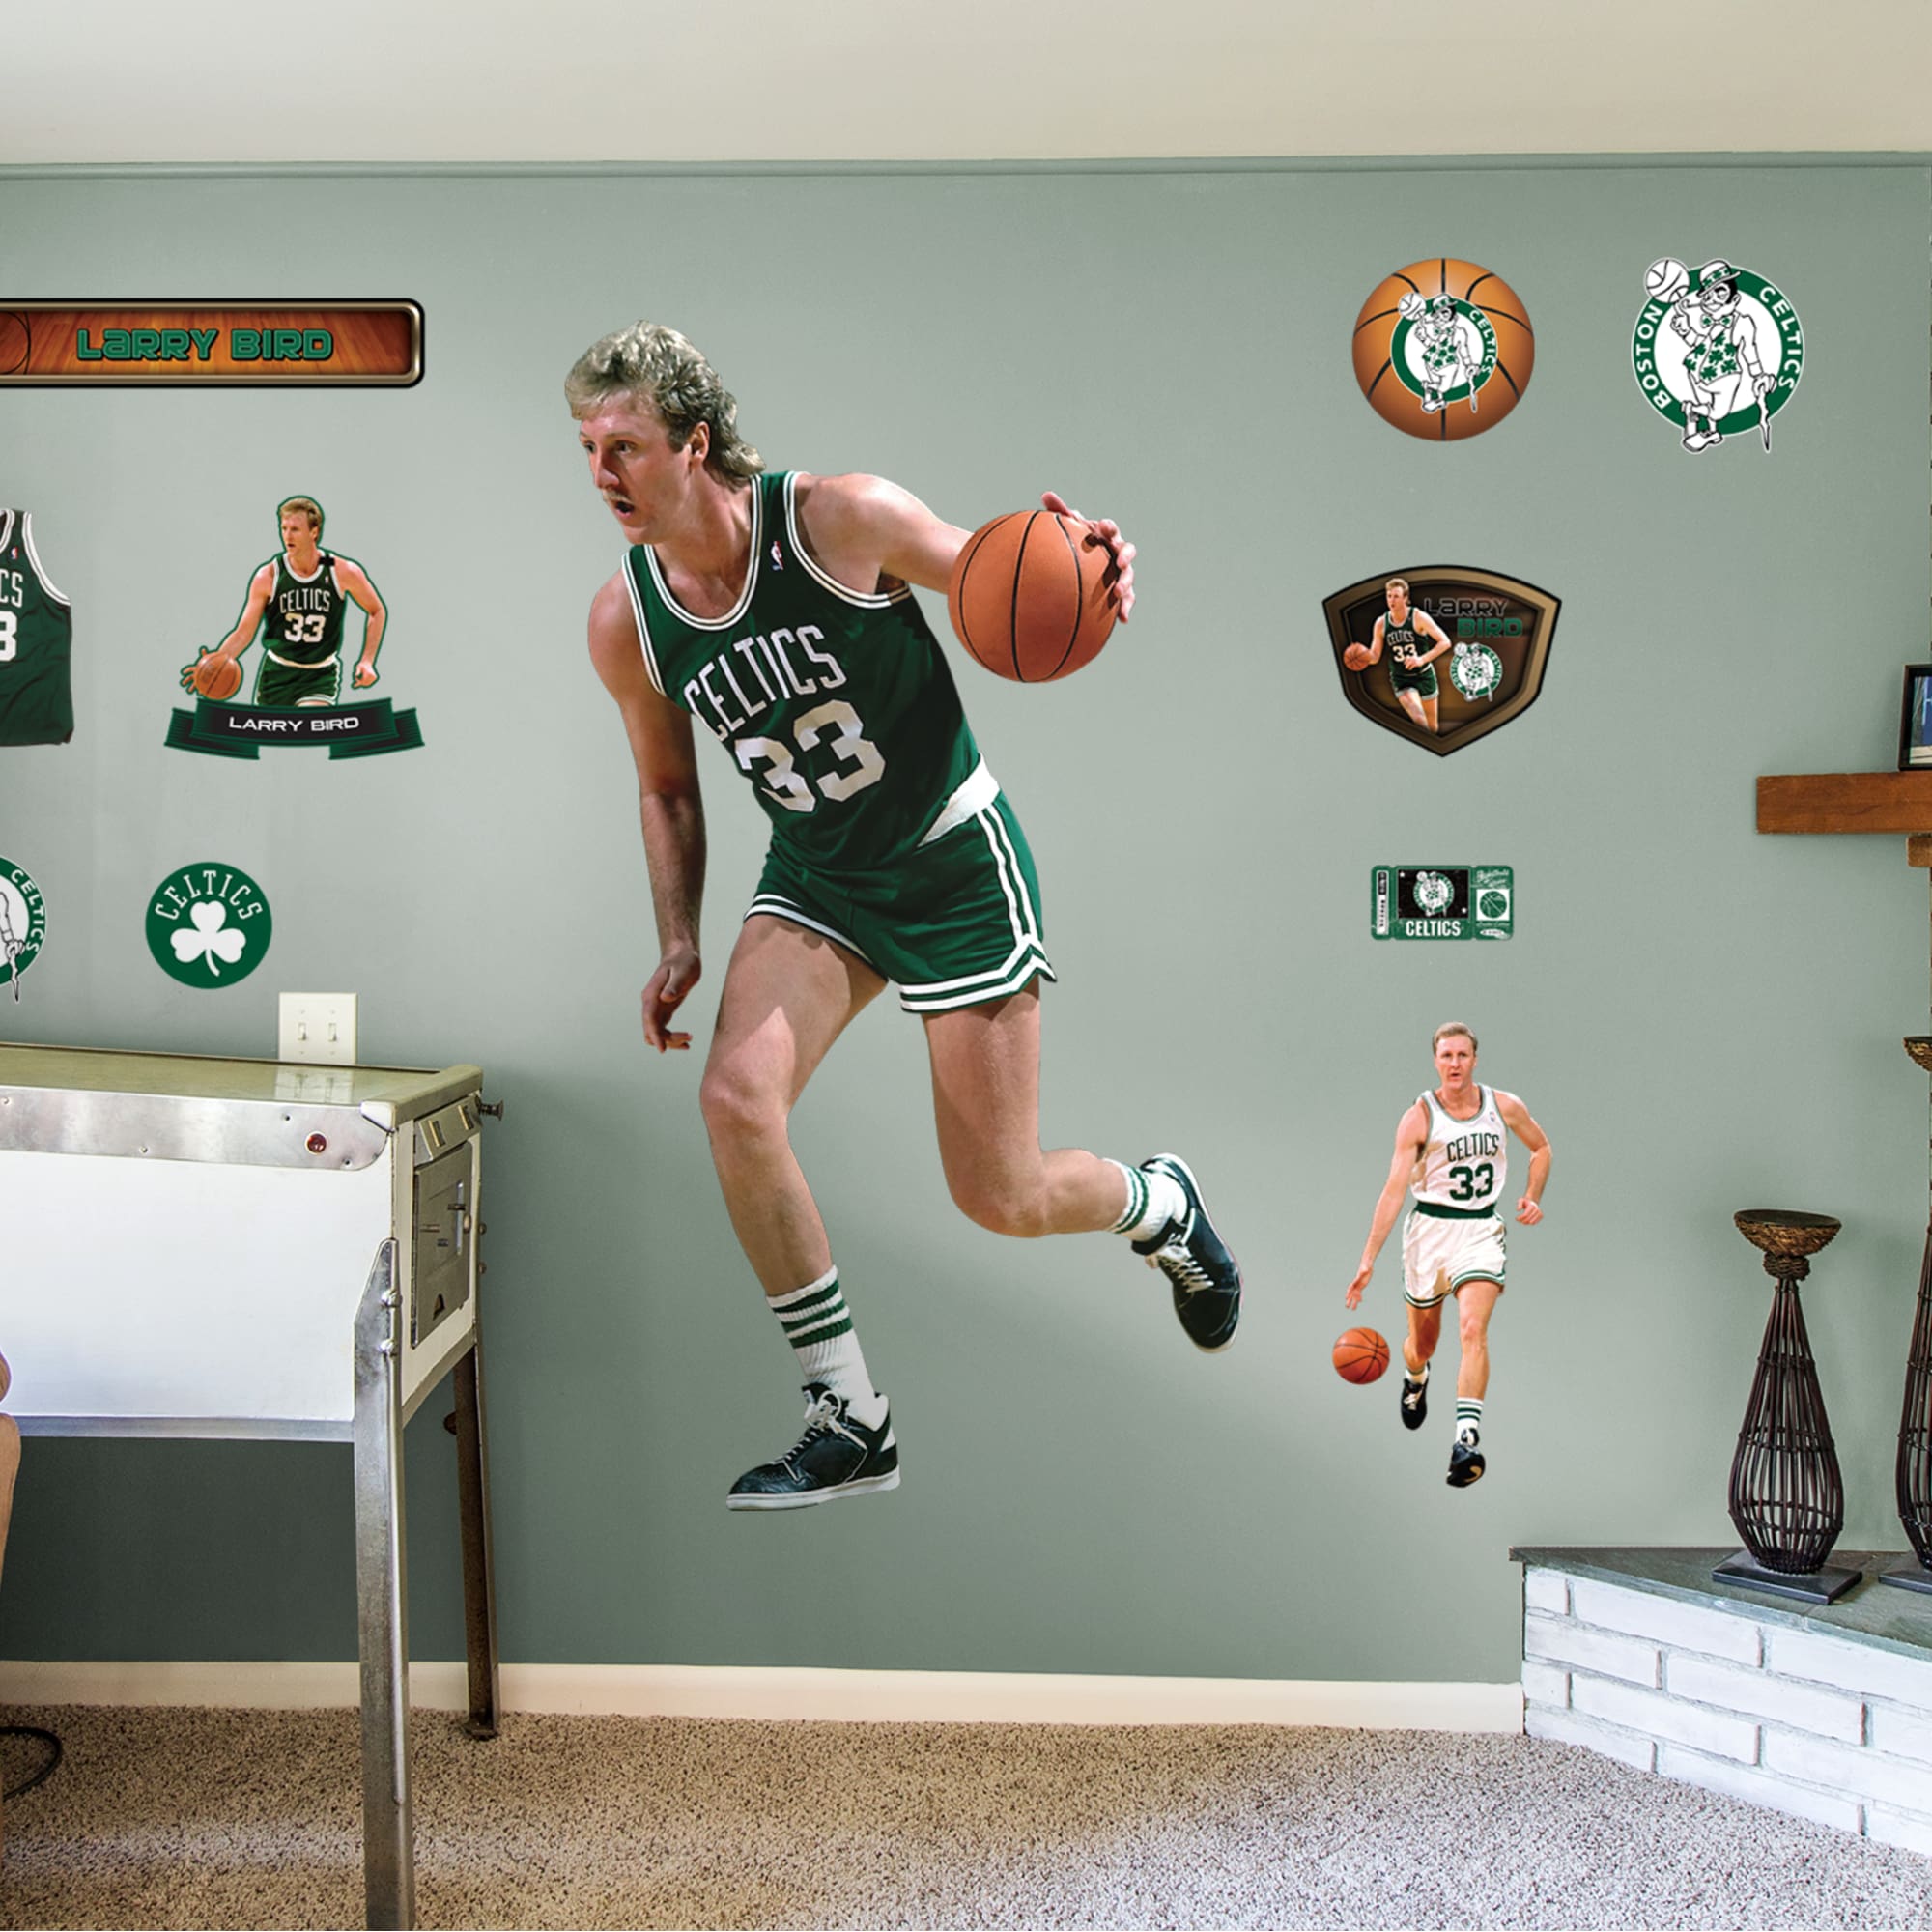 Celtics on NBC Sports Boston on X: Check out Larry Bird's